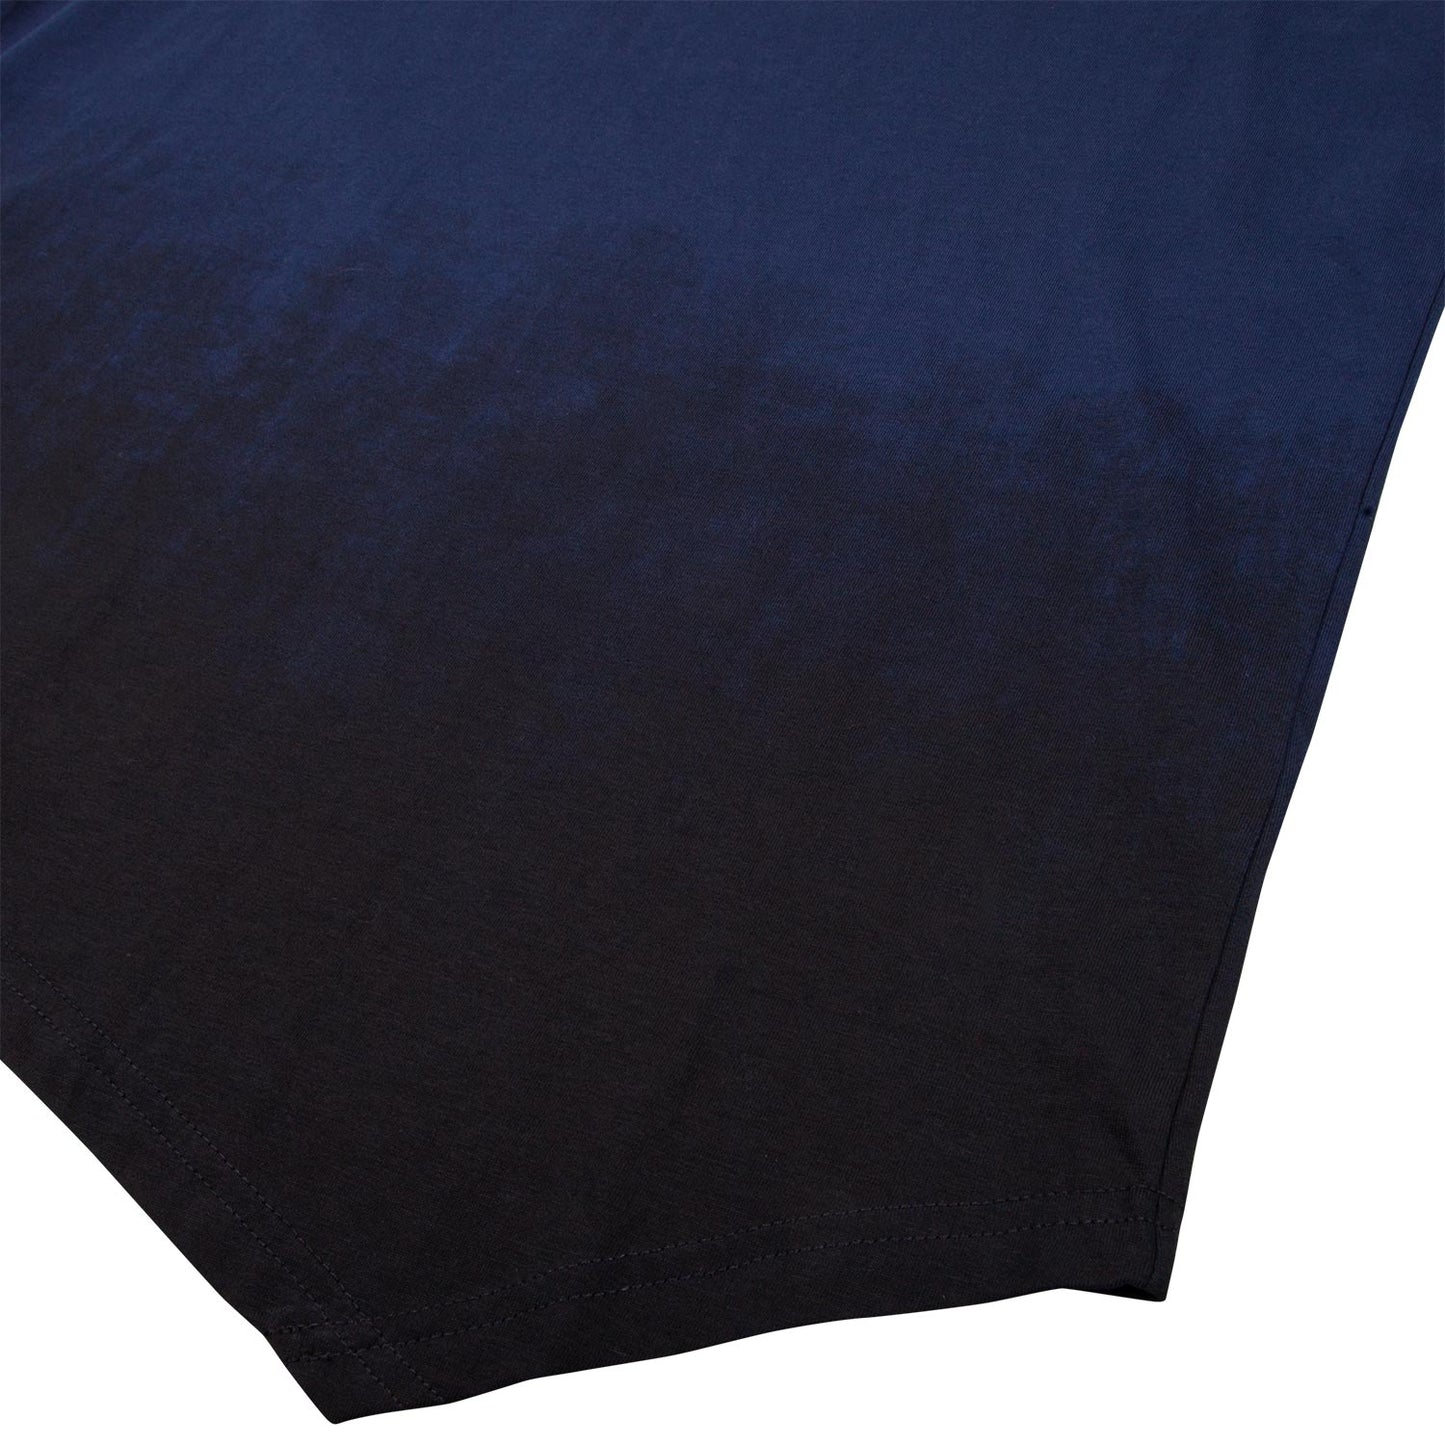 Venum Interference 2.0 T-shirt - Navy Blue